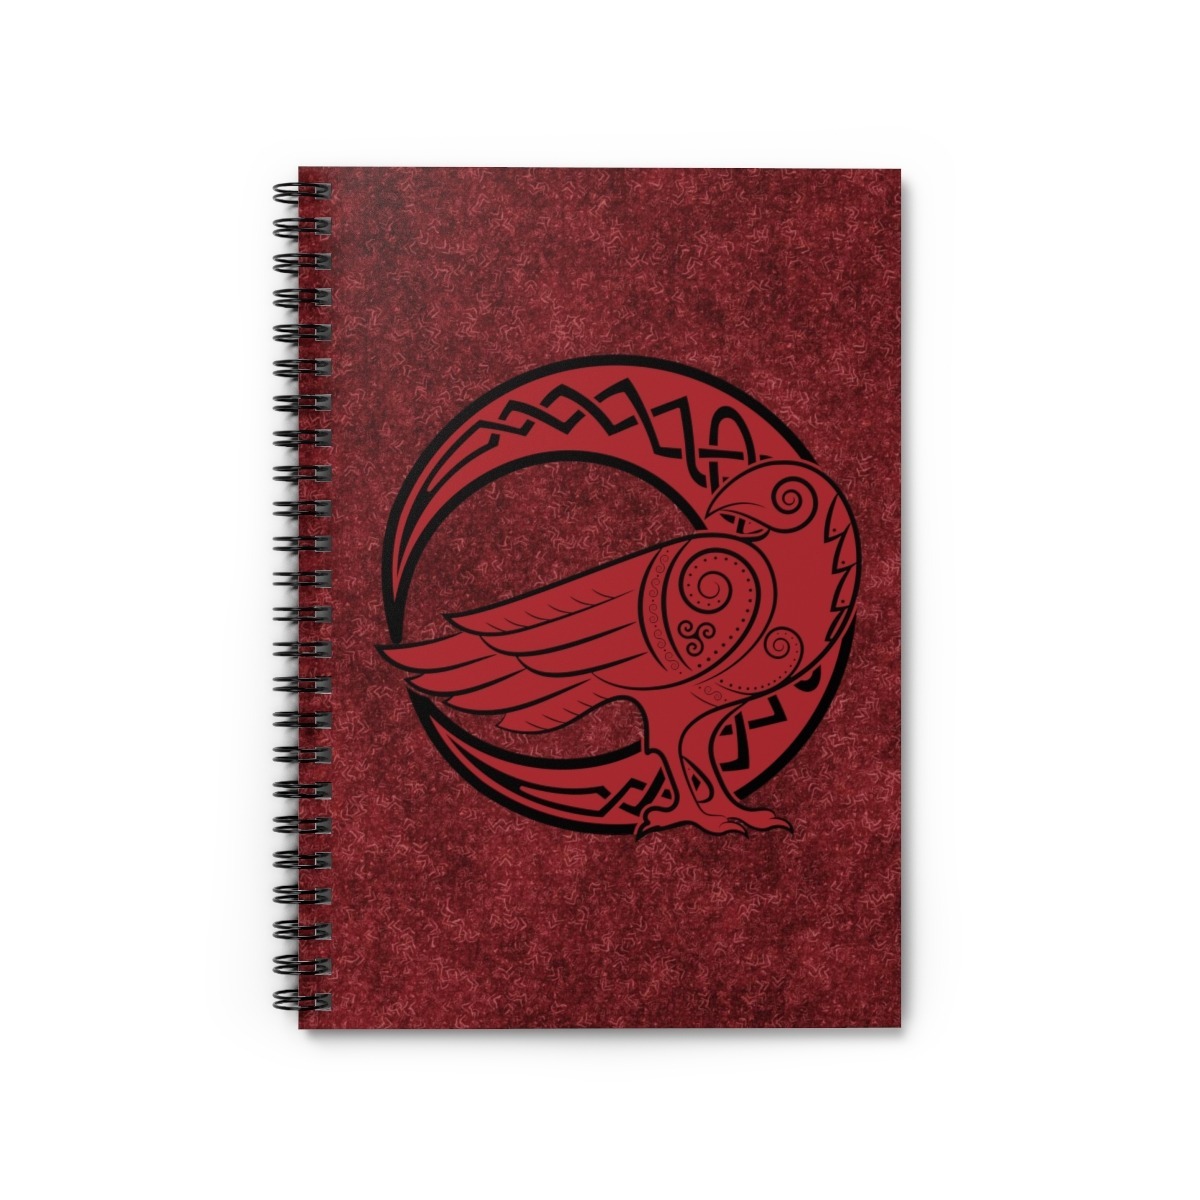 Red Raven Crescent Moon Spiral Notebook